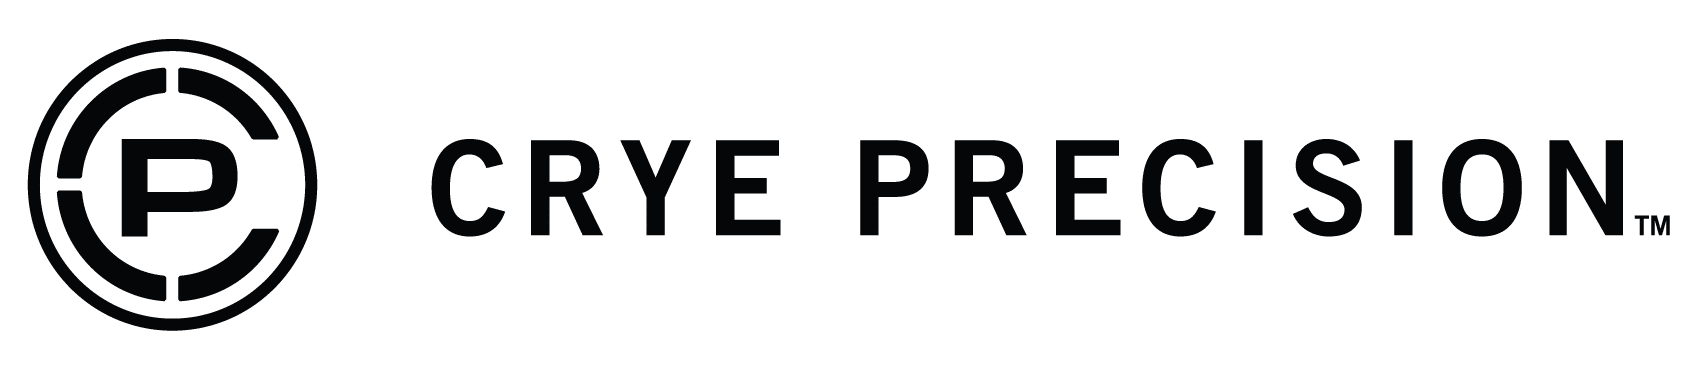 Crye Precision Title Sponsor